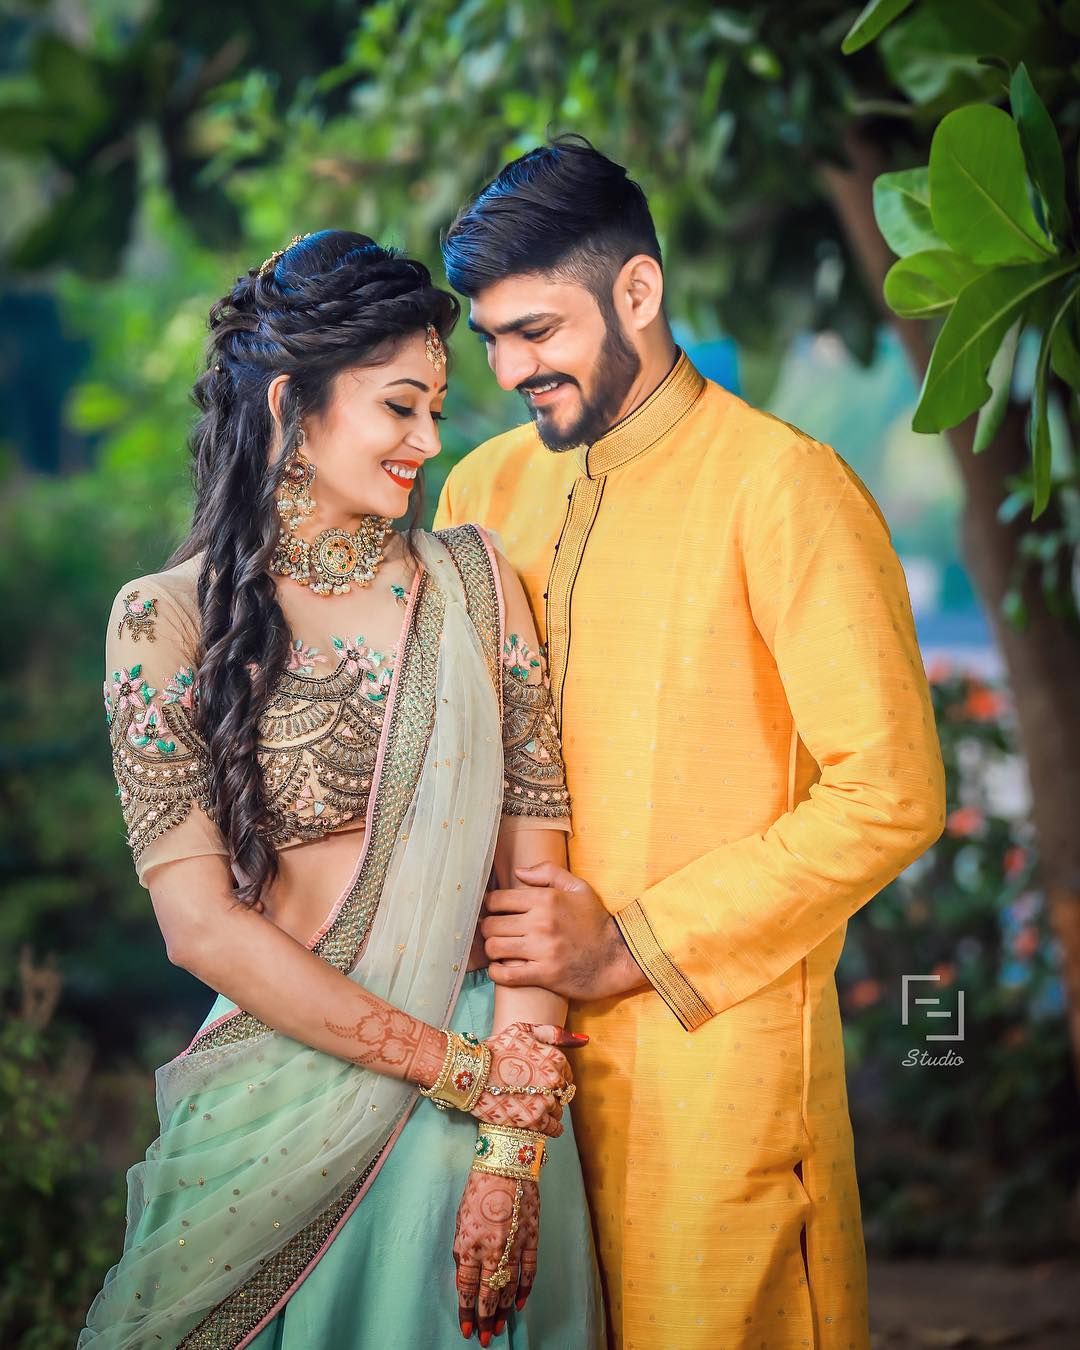 Indian wedding photography couples .com